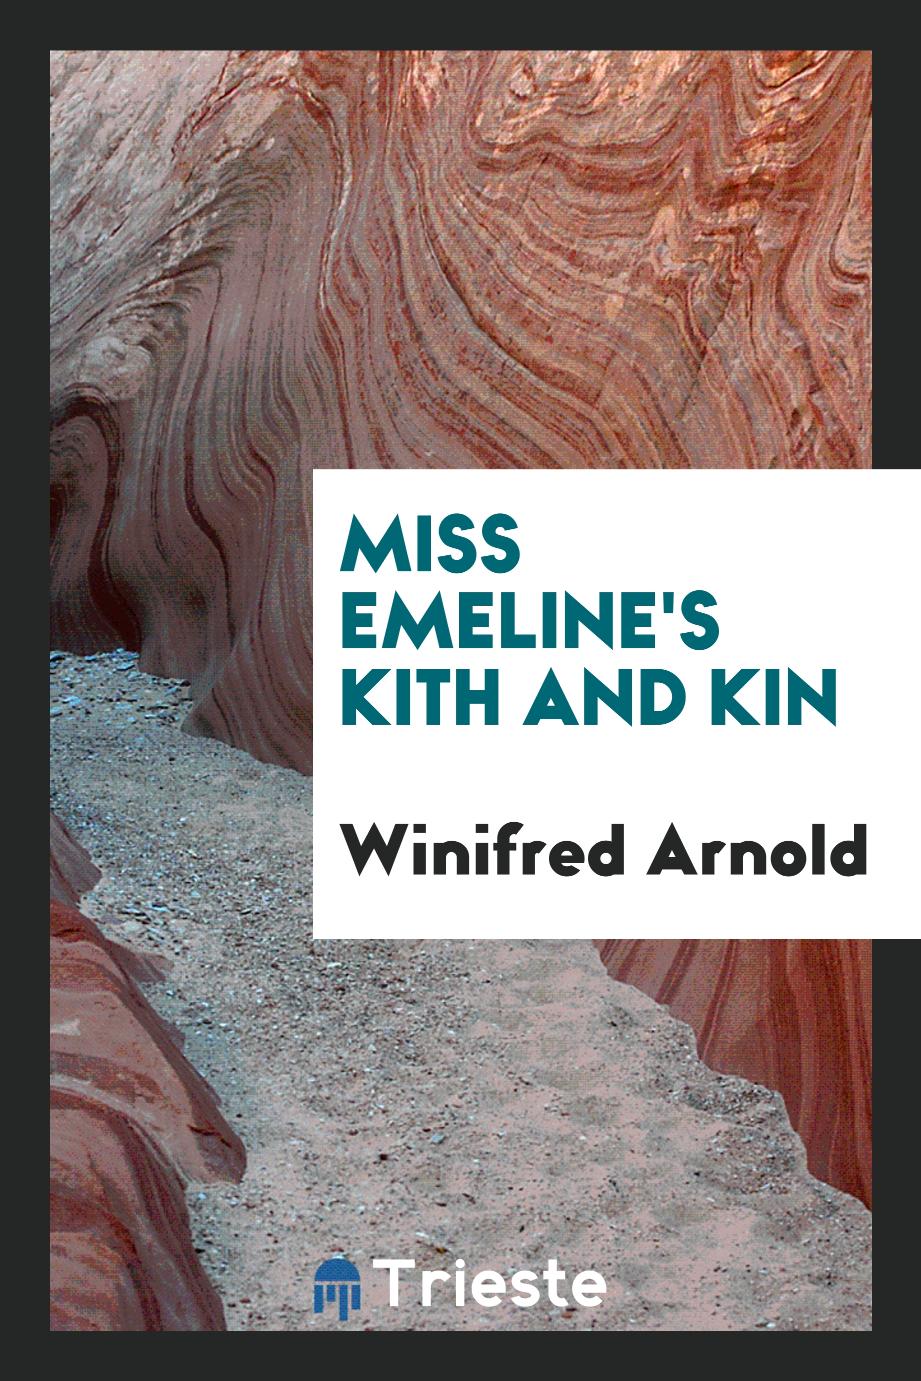 Miss Emeline's kith and kin